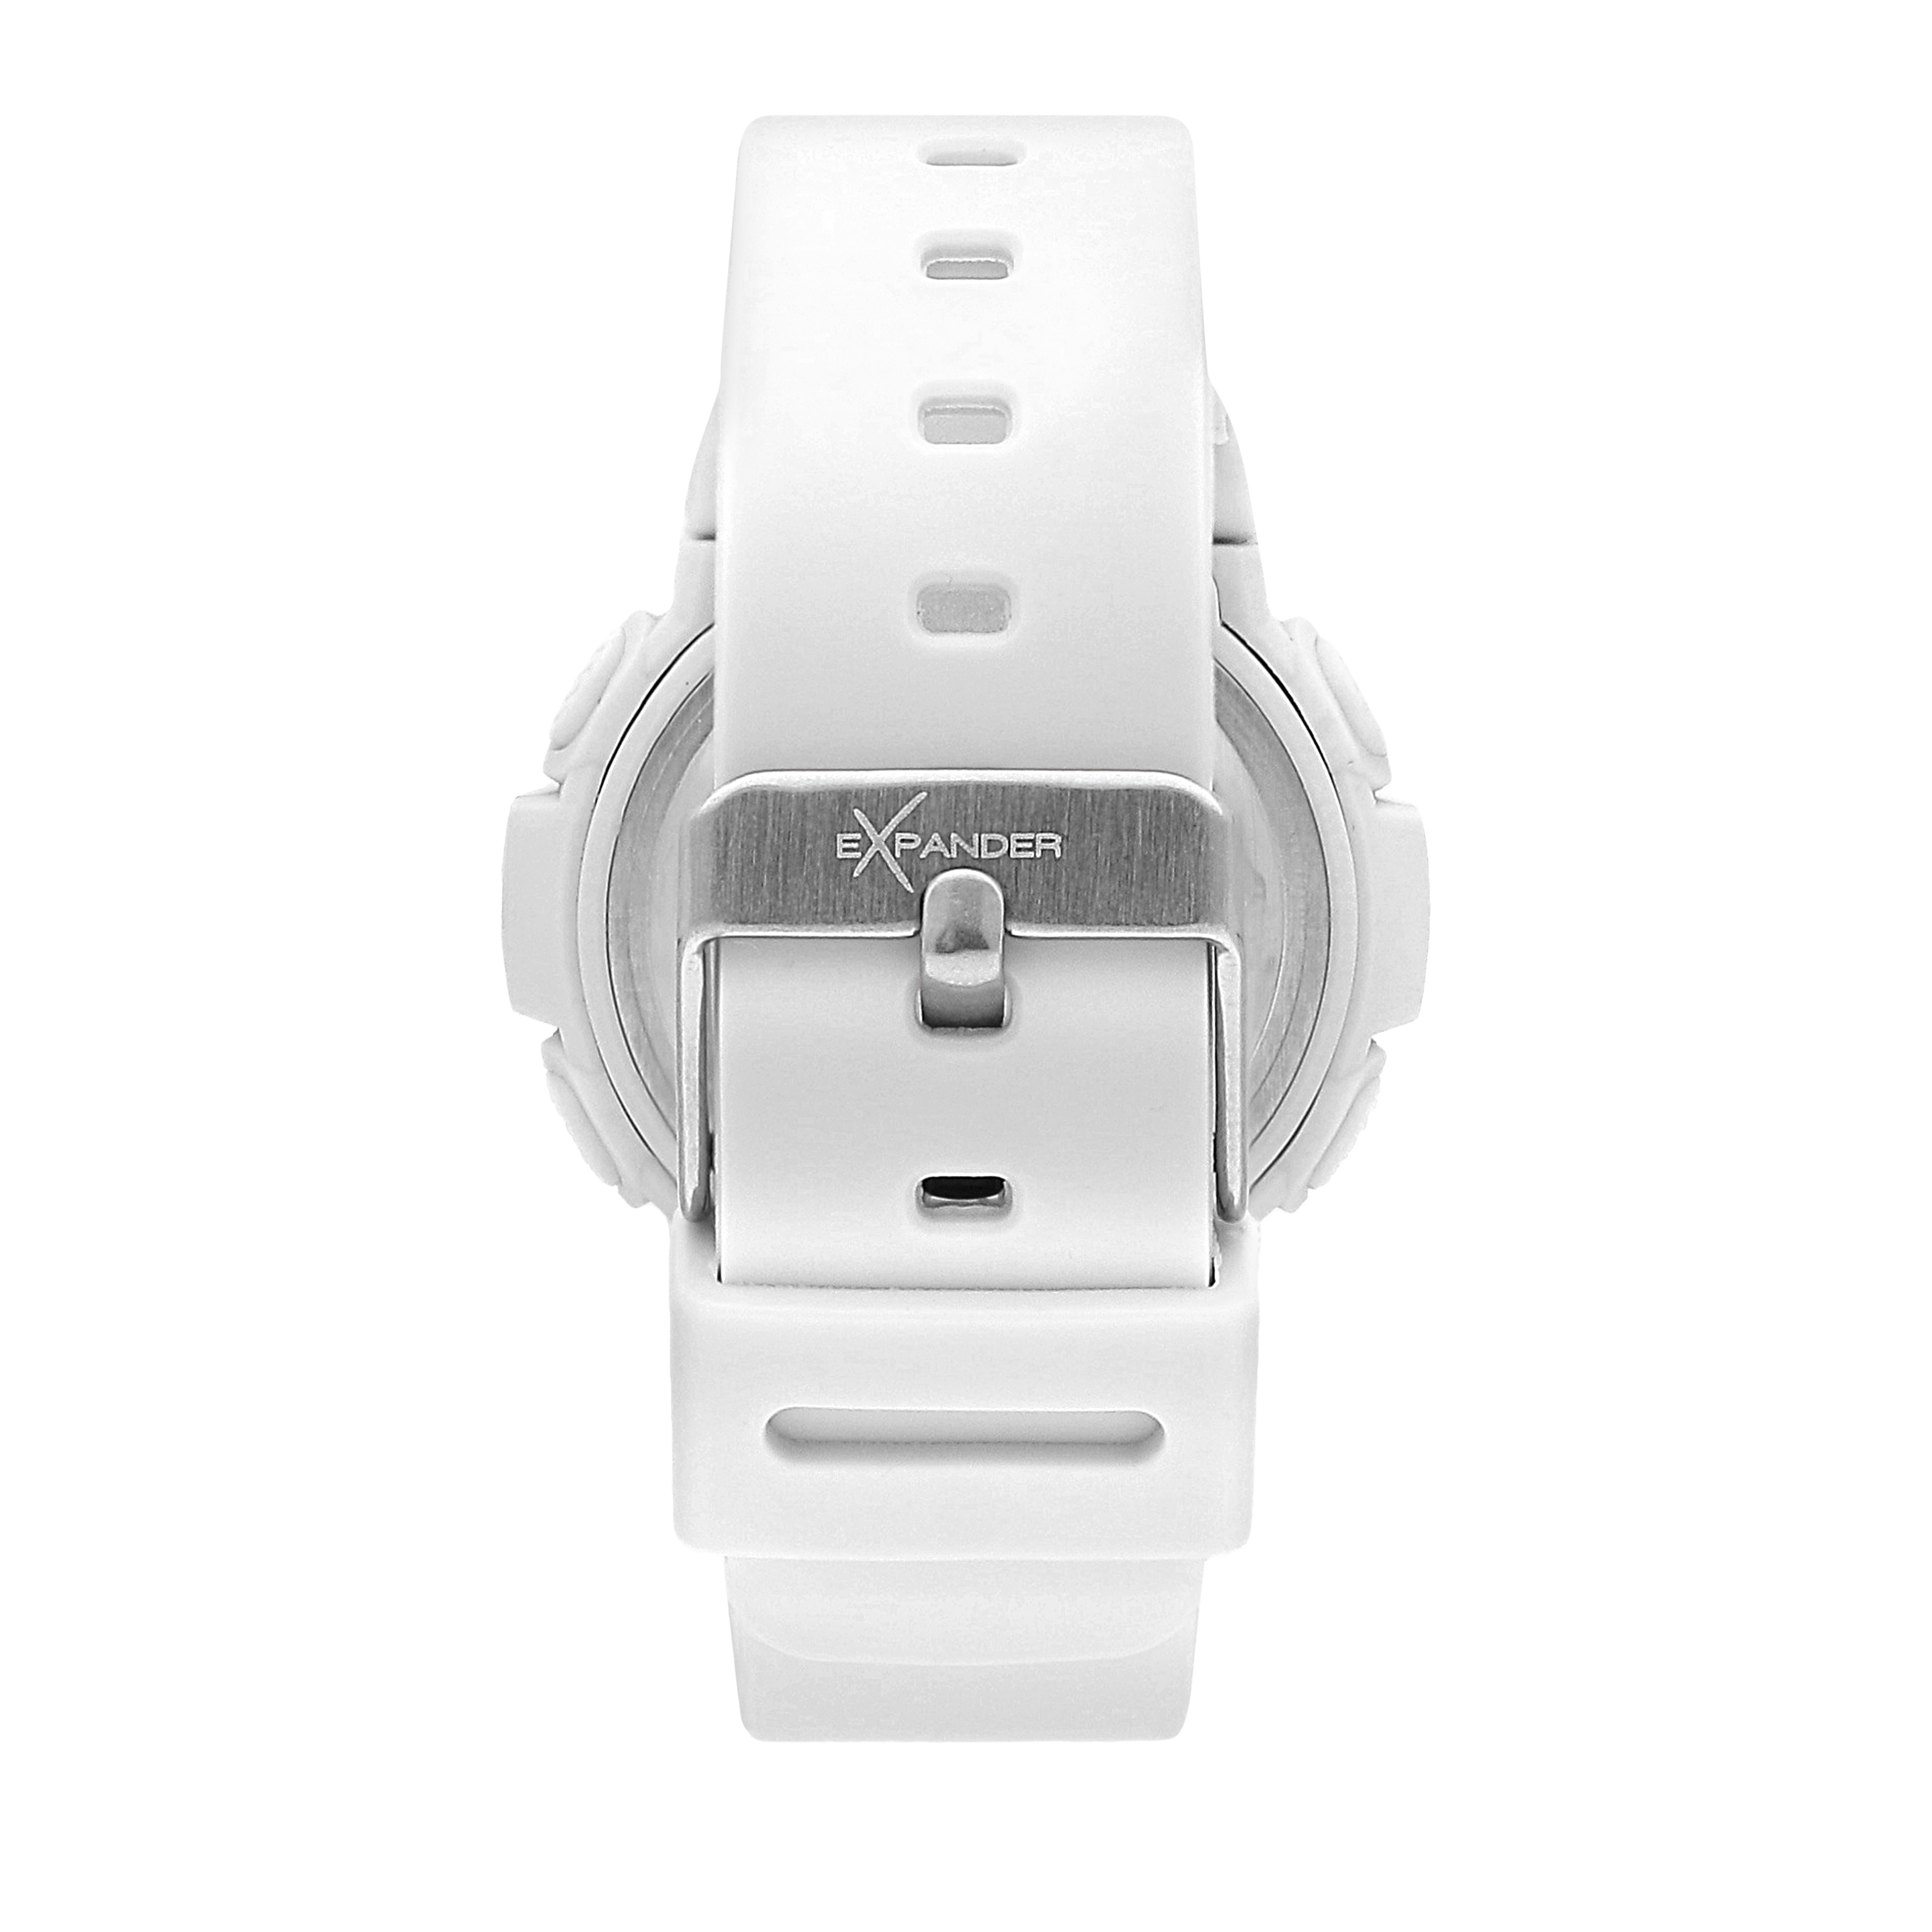 Sector EX-16 White Digital Watch R3251525501